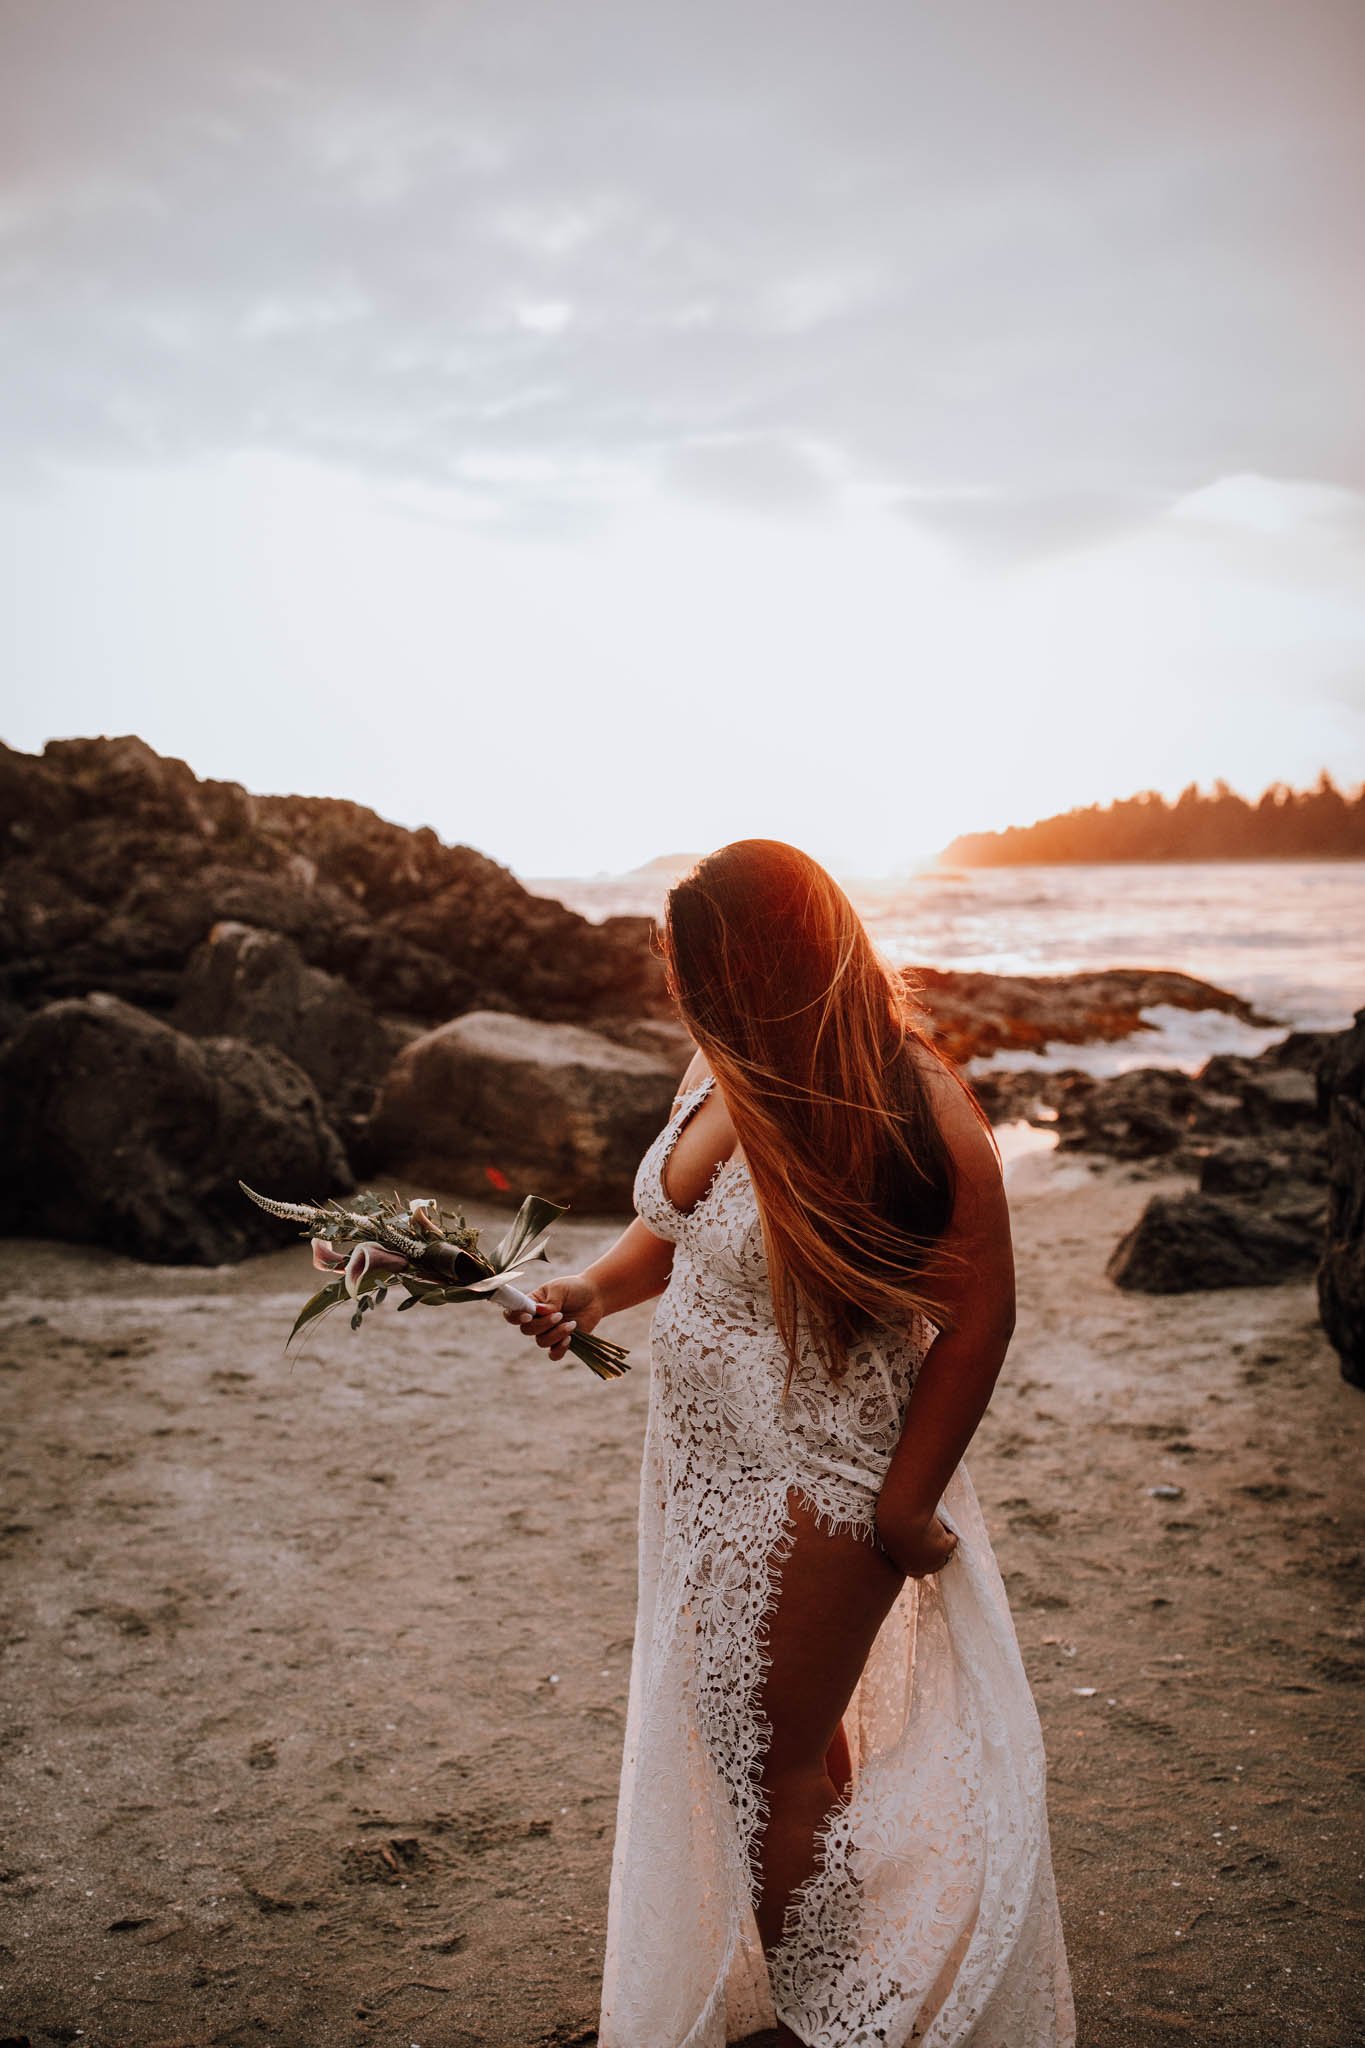 Clarize and David Elopement - Tofino Vancouver Island British Columbia - Elyse Anna Photography-2686.jpg